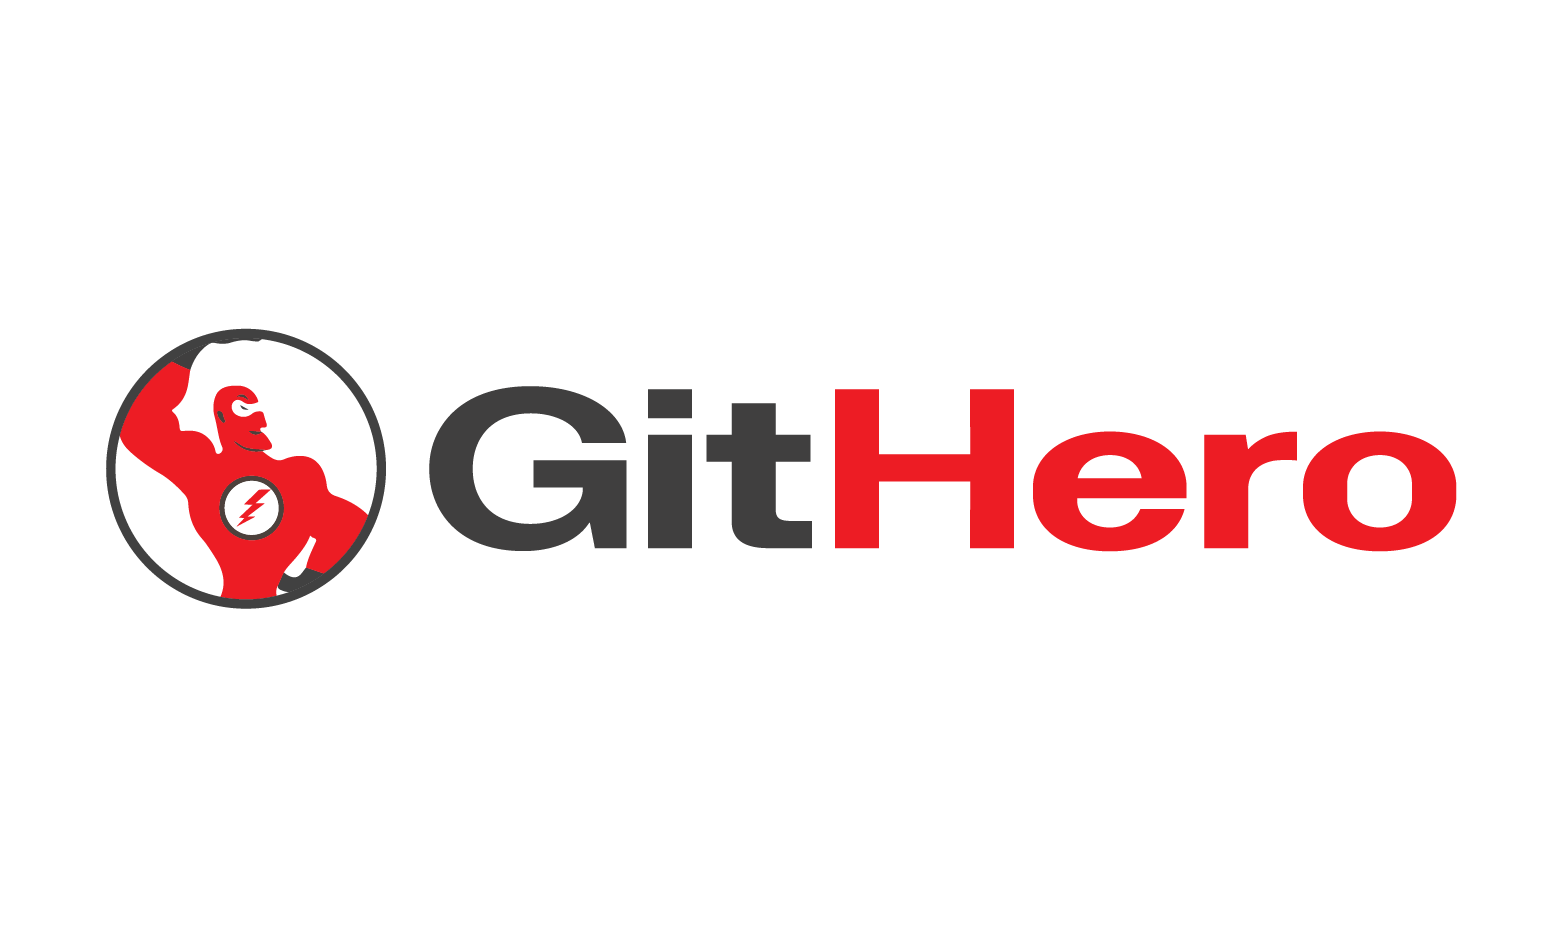 GitHero.com - Creative brandable domain for sale